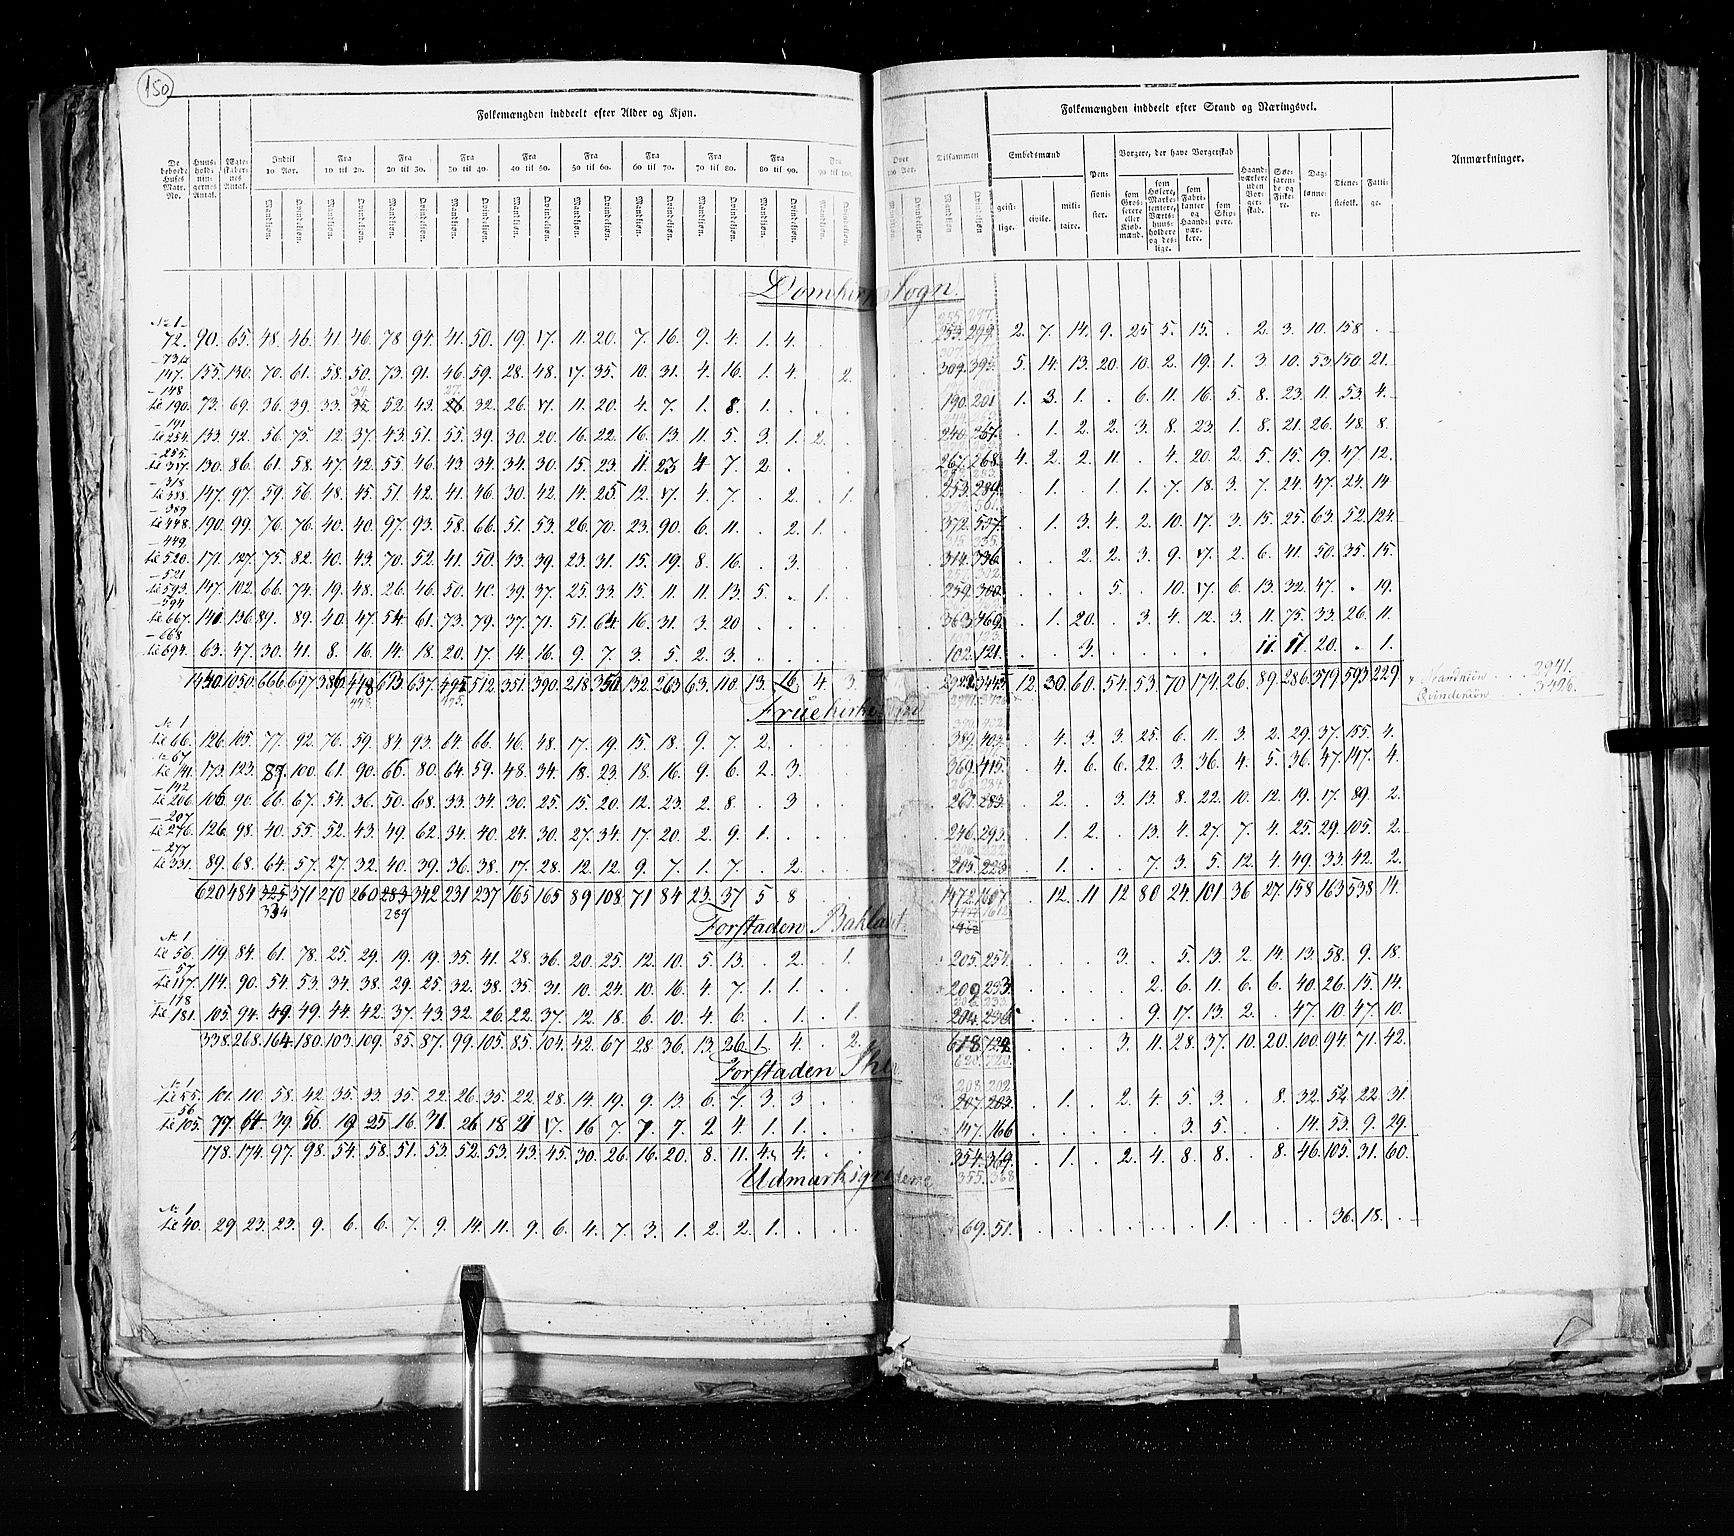 RA, Census 1825, vol. 21: Risør-Vardø, 1825, p. 150